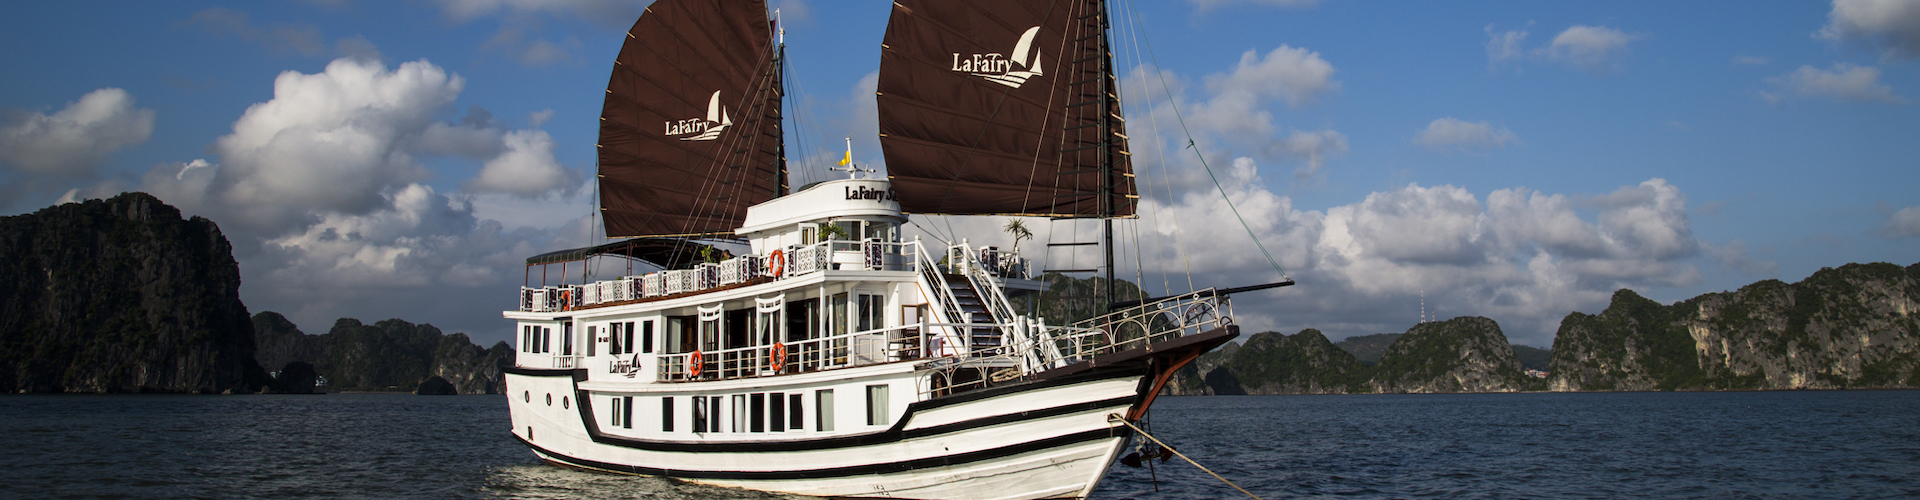 LaFairy Sails